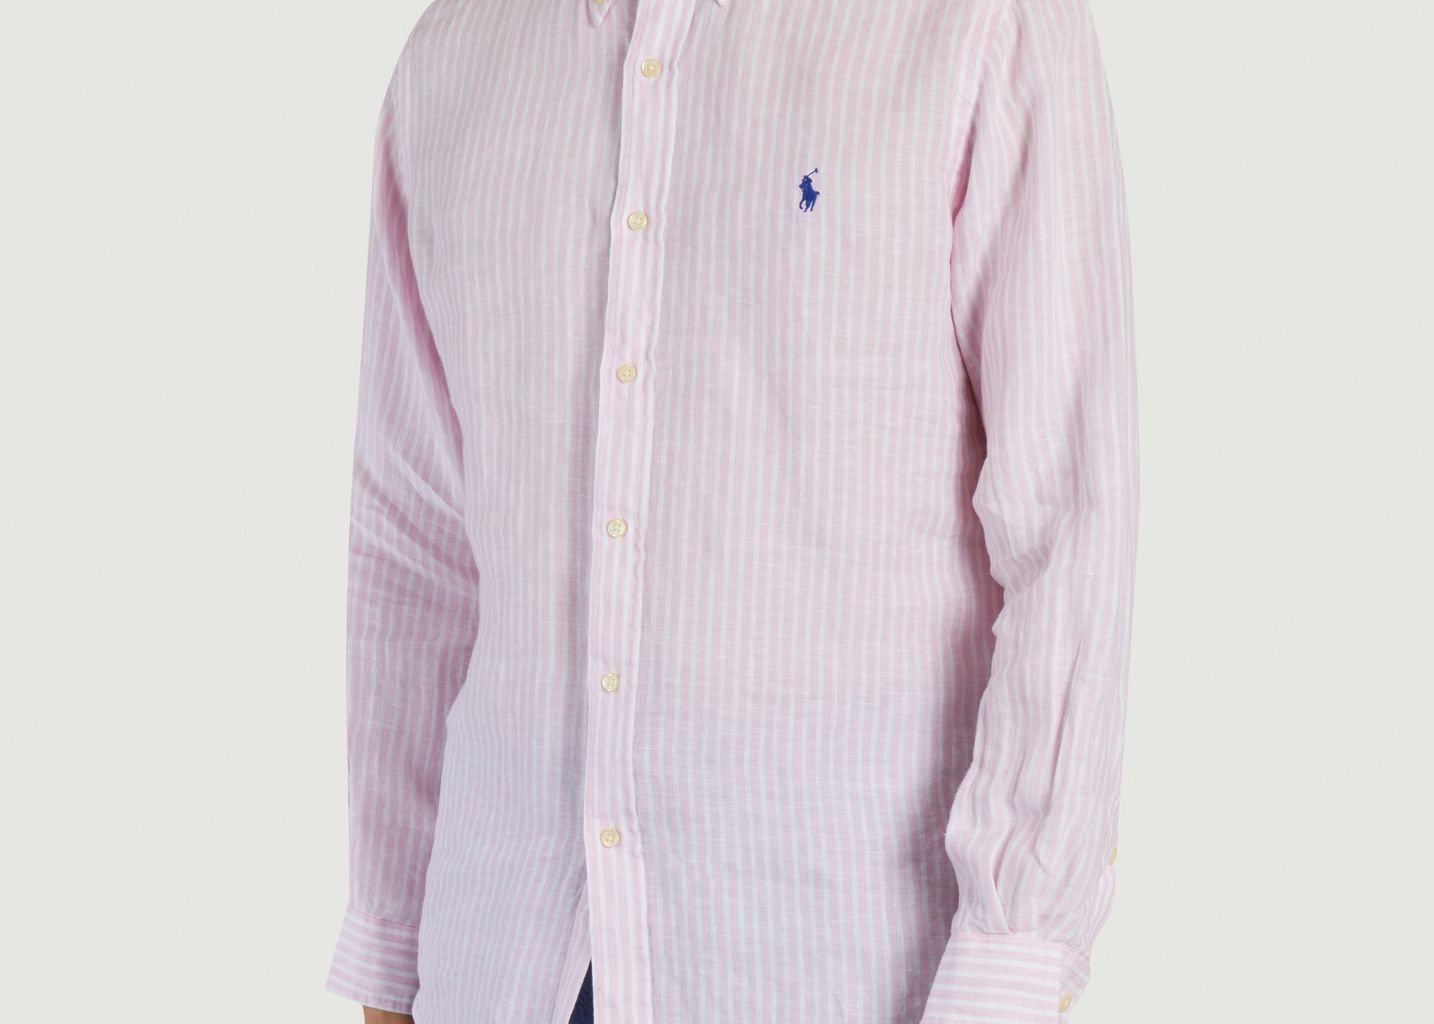 Striped Oxford shirt - Polo Ralph Lauren